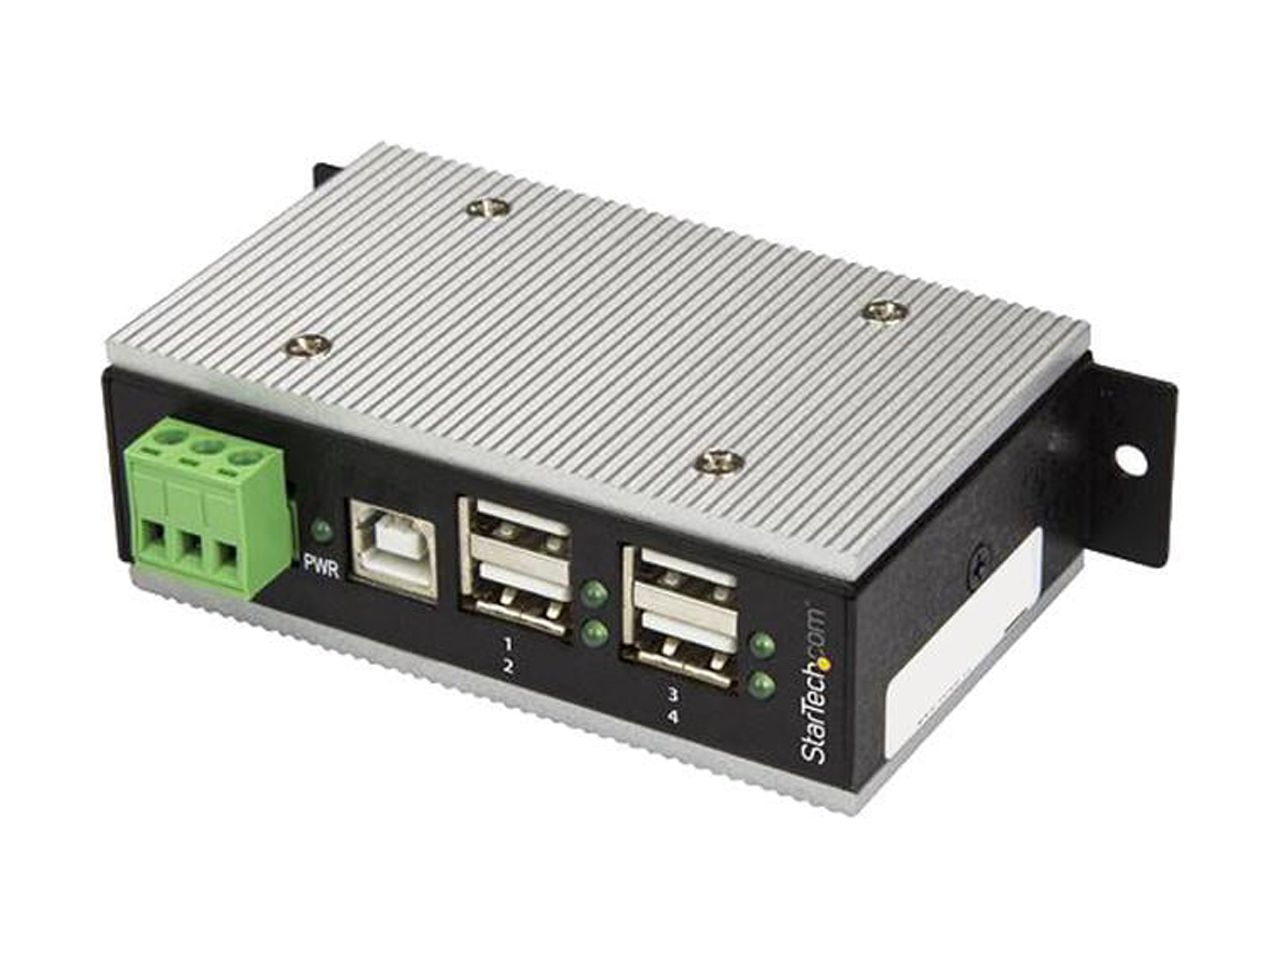 StarTech HB20A4AME 4 Port Industrial USB Hub - Metal - USB 2.0 - 15kV ESD Protection - Surface or DIN Rail - USB Splitter - USB Port Expander - image 1 of 2